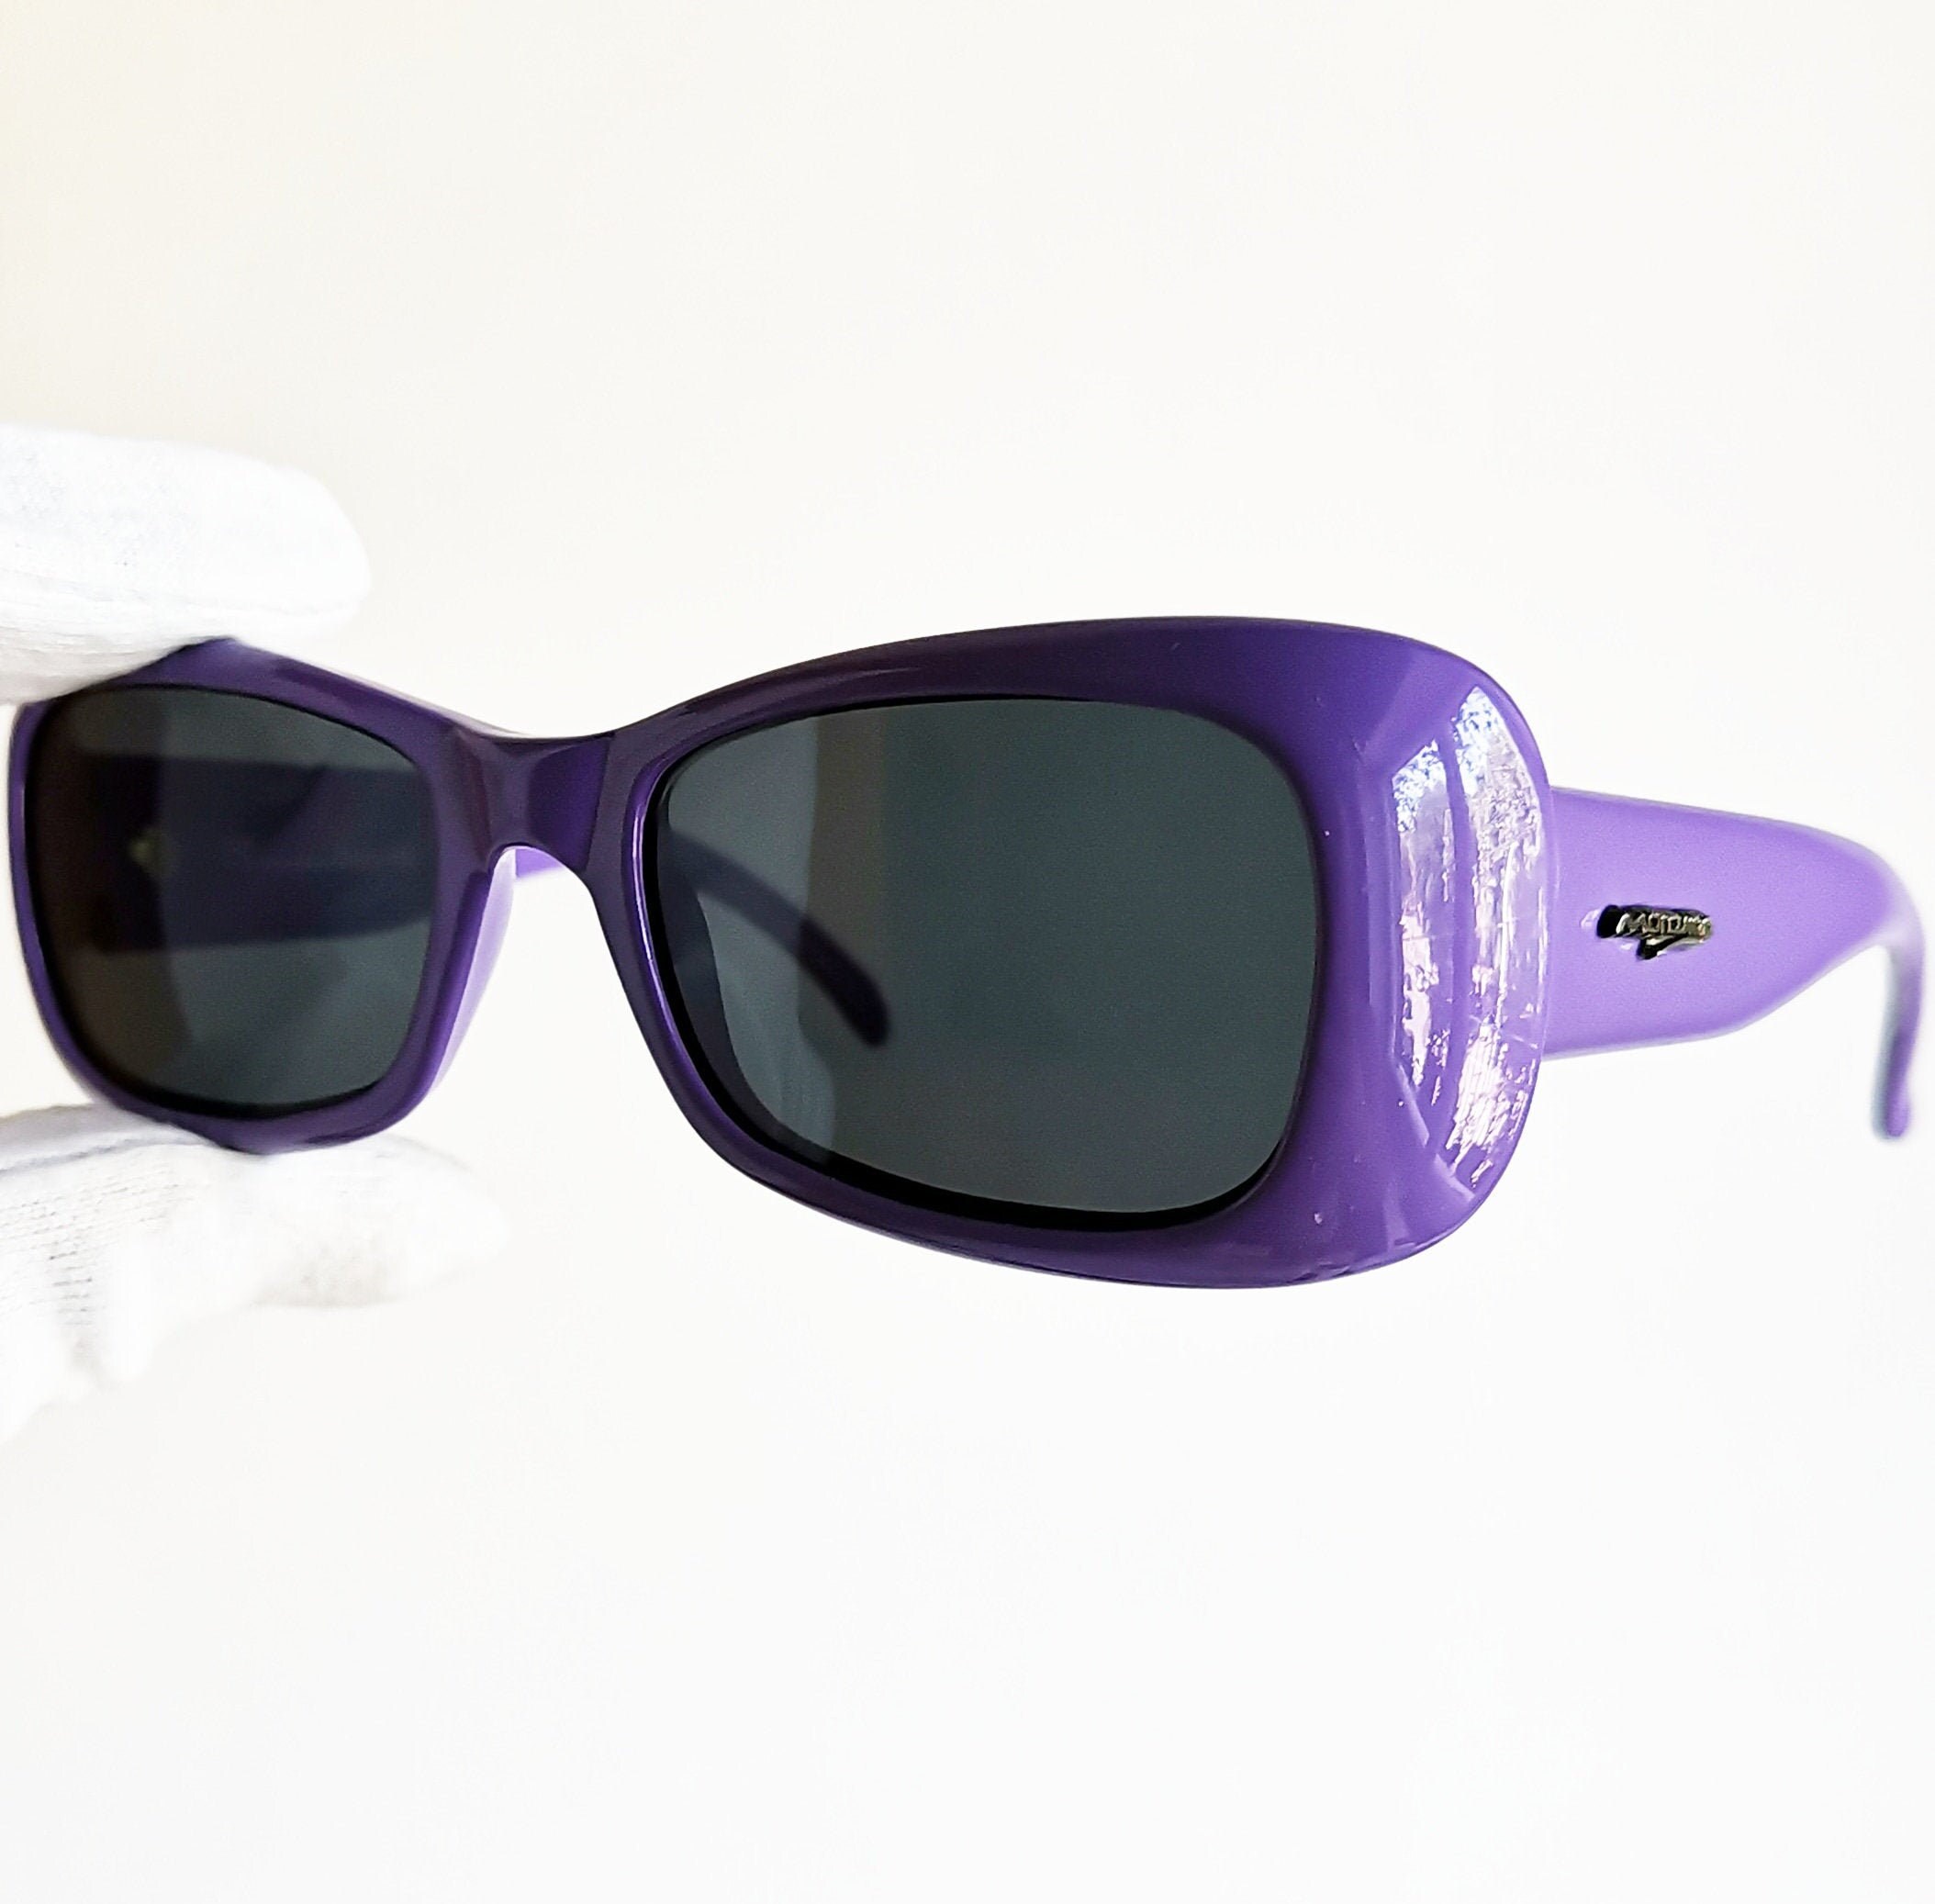 chanel black frame sunglasses